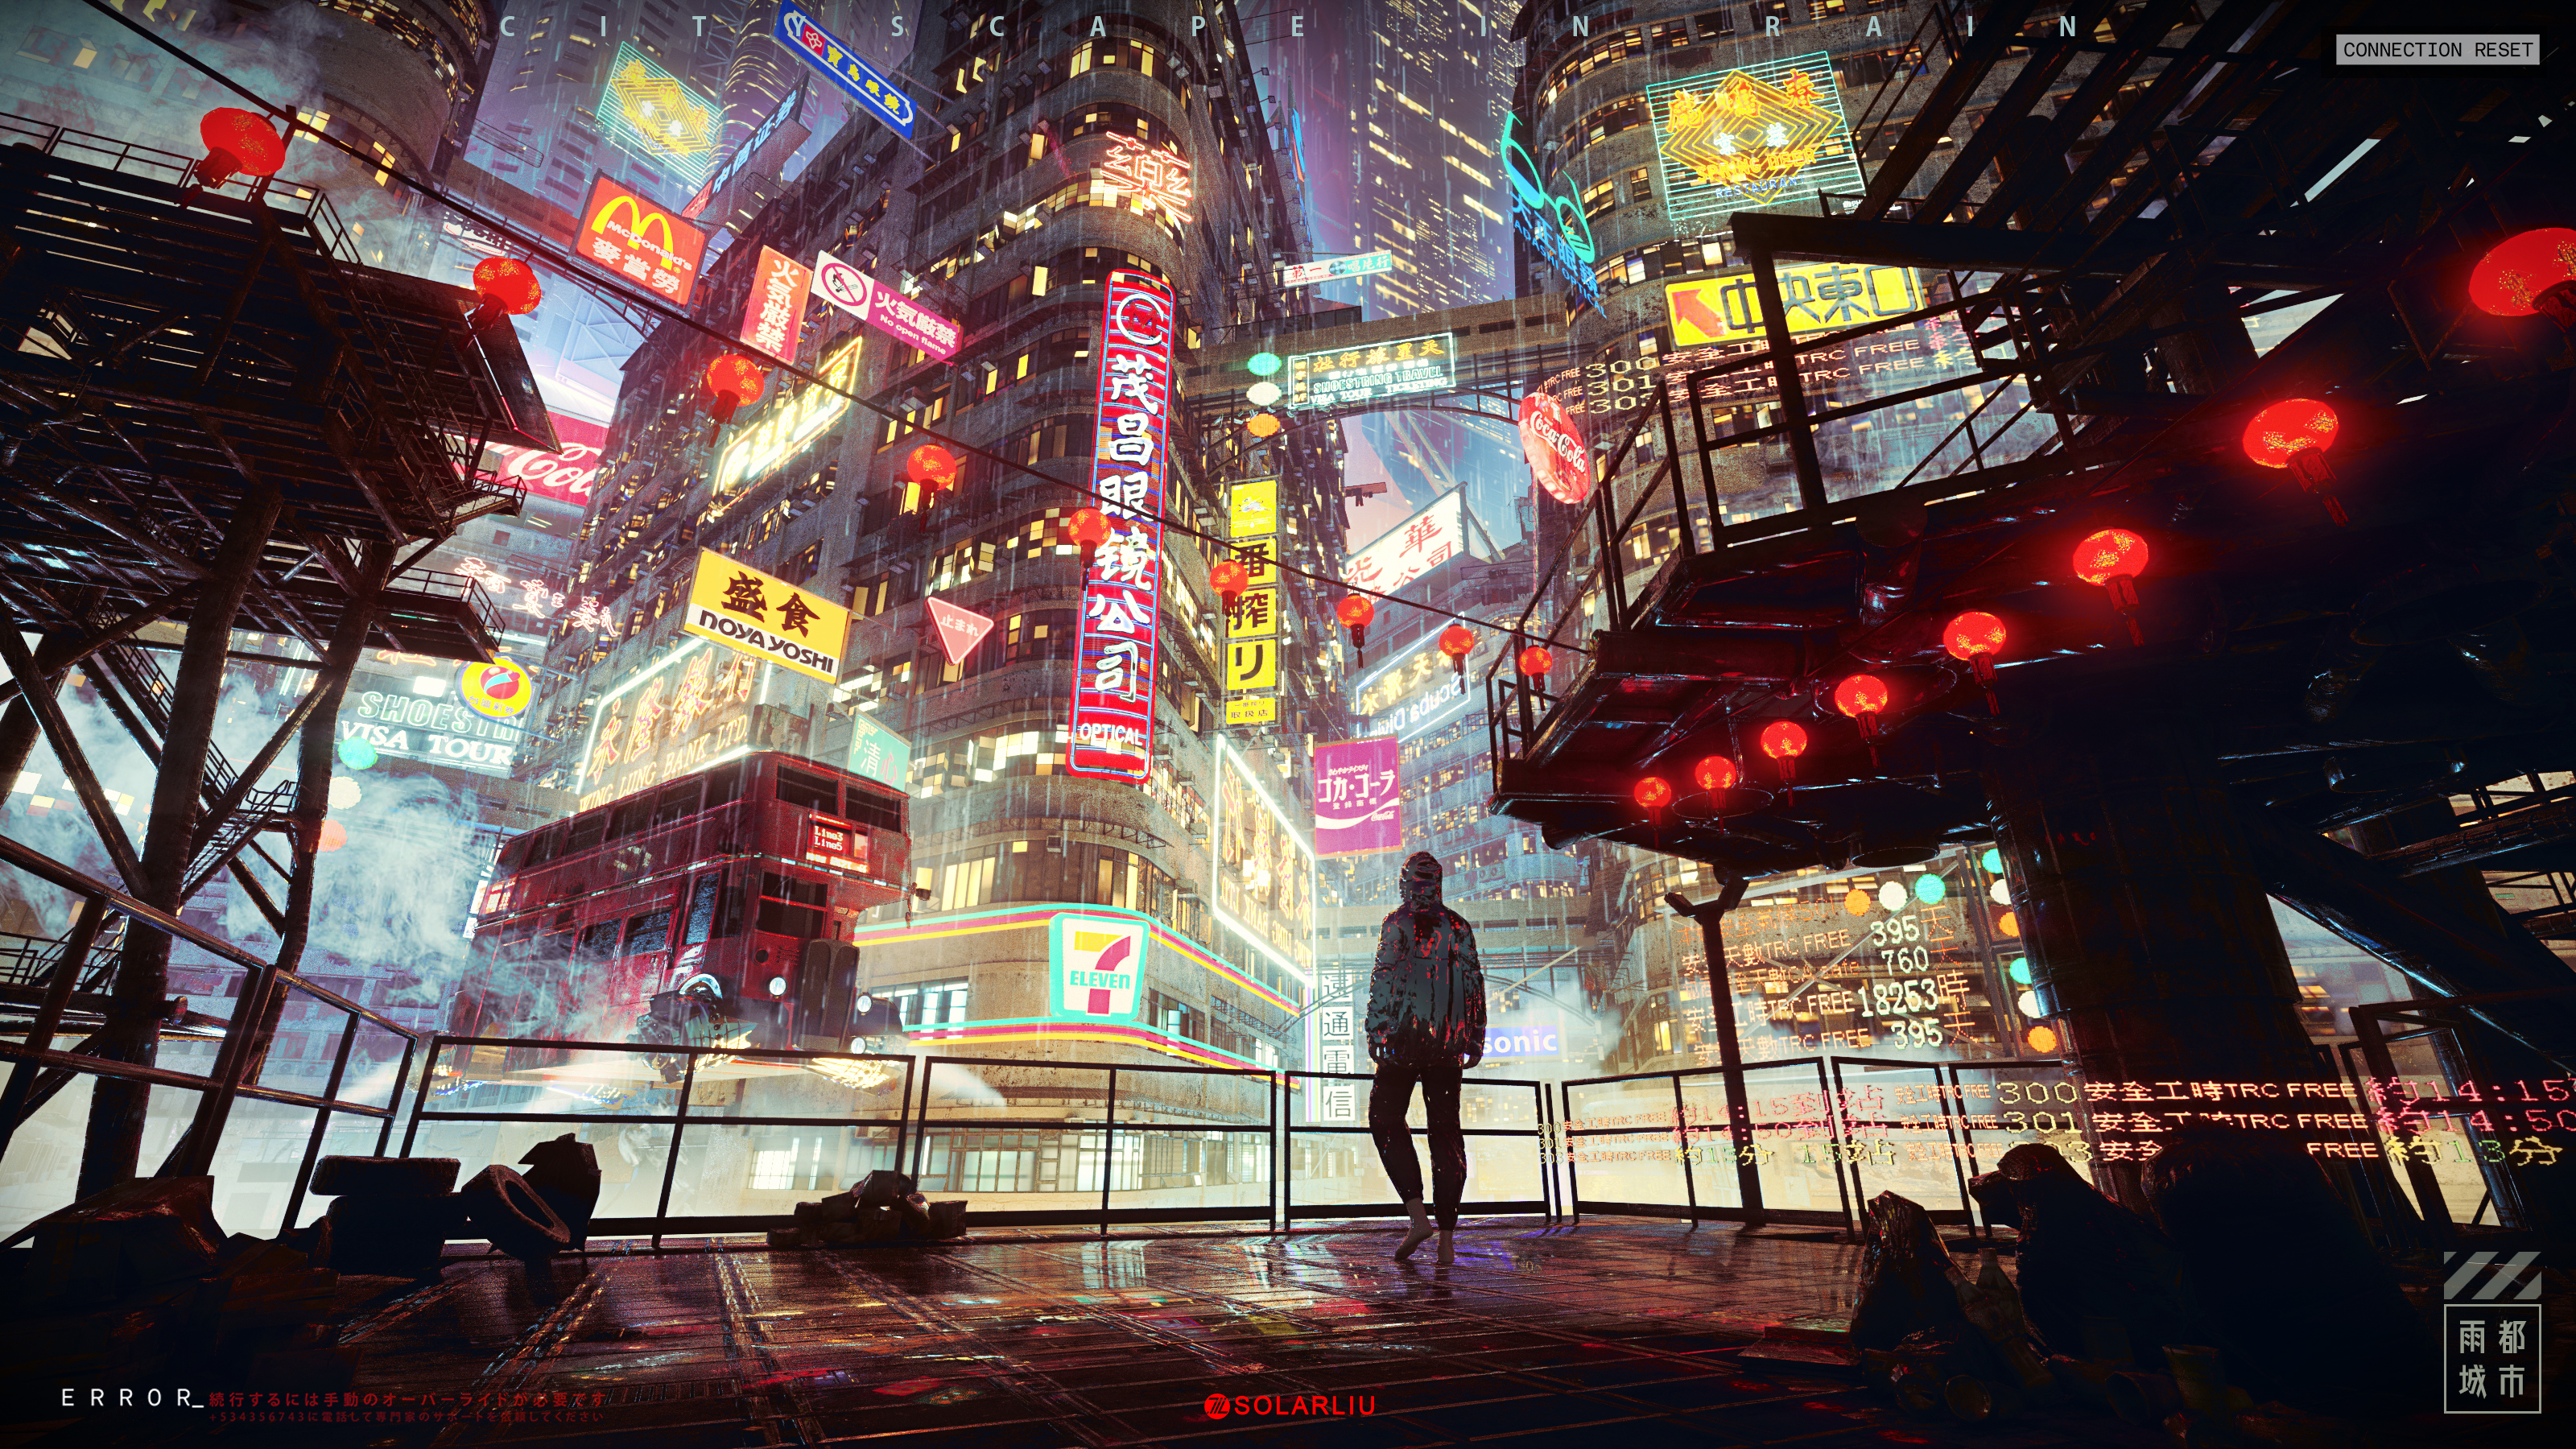 Solarliu City Architecture Science Fiction Digital Art 4K Rain Cityscape Cyberpunk Artwork 3200x1800